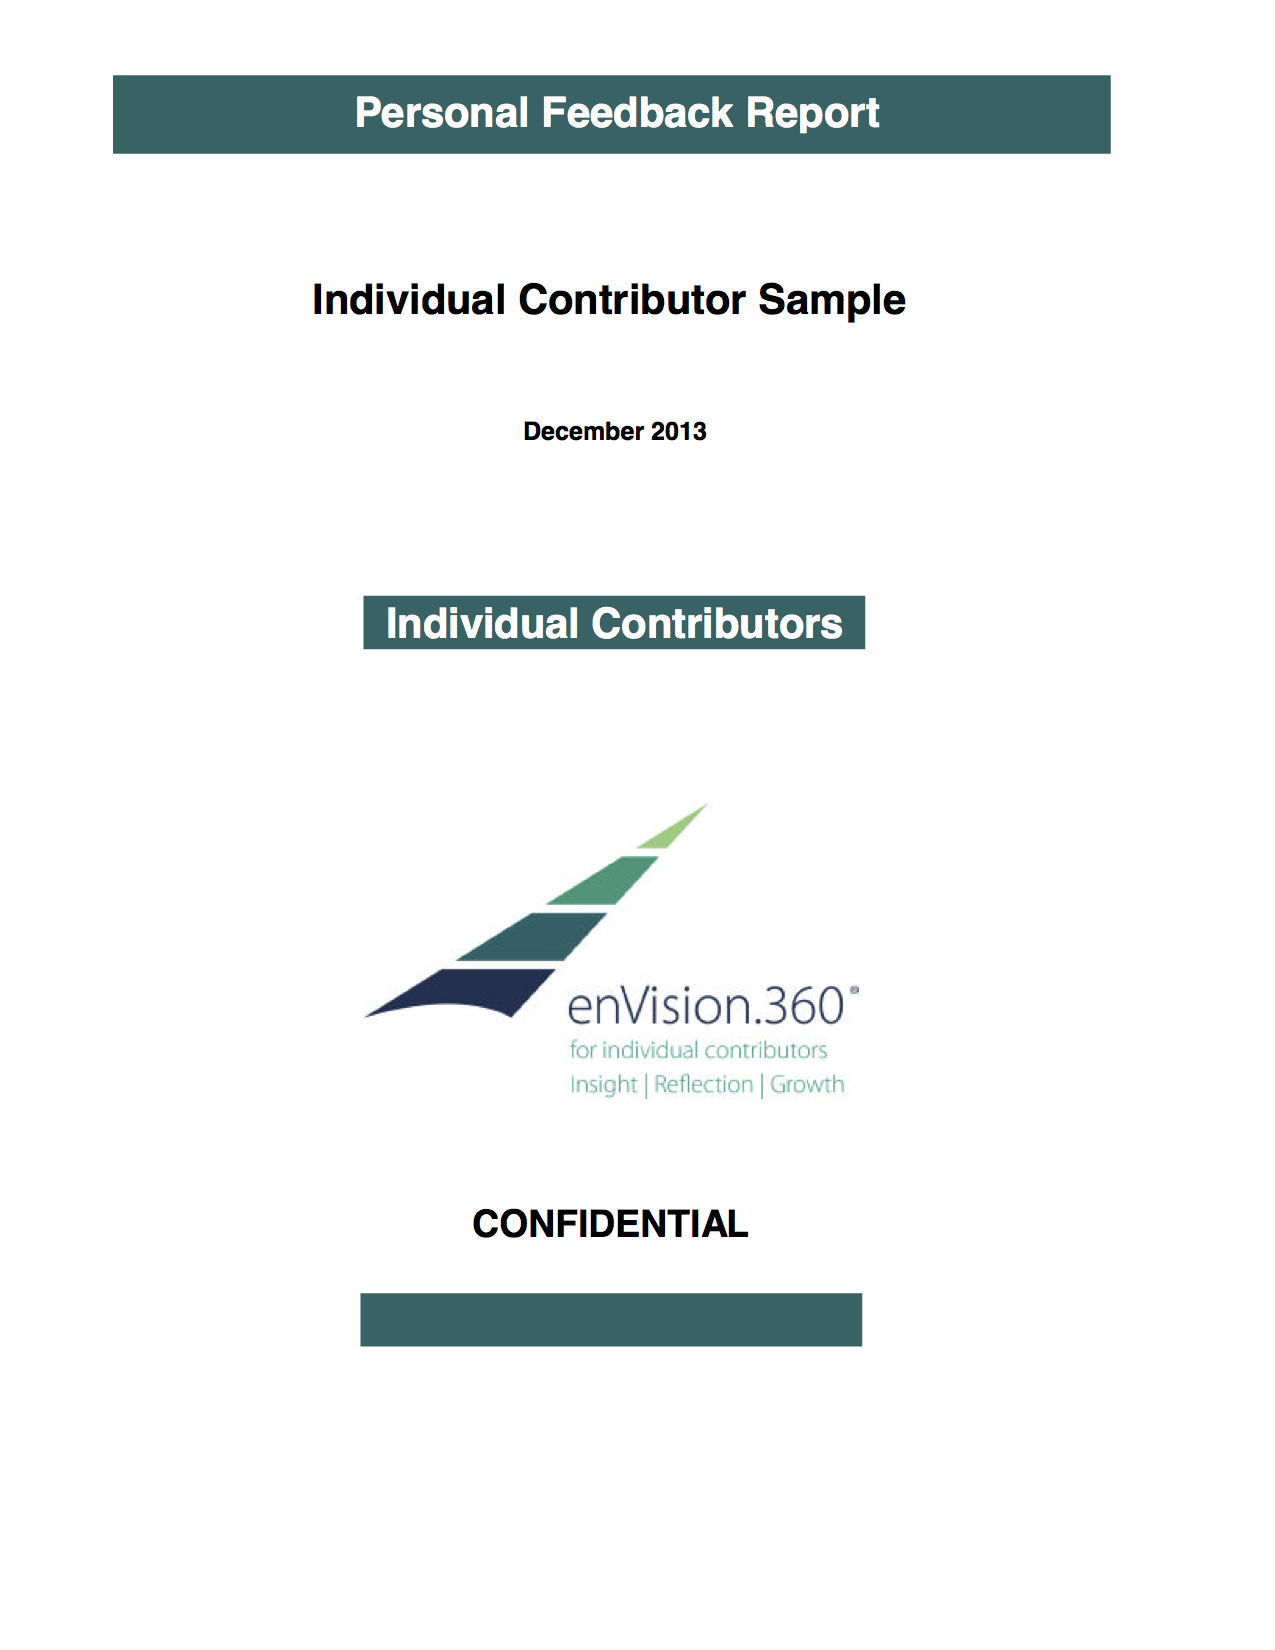 enVision.360 Sample Individual Contributor Report